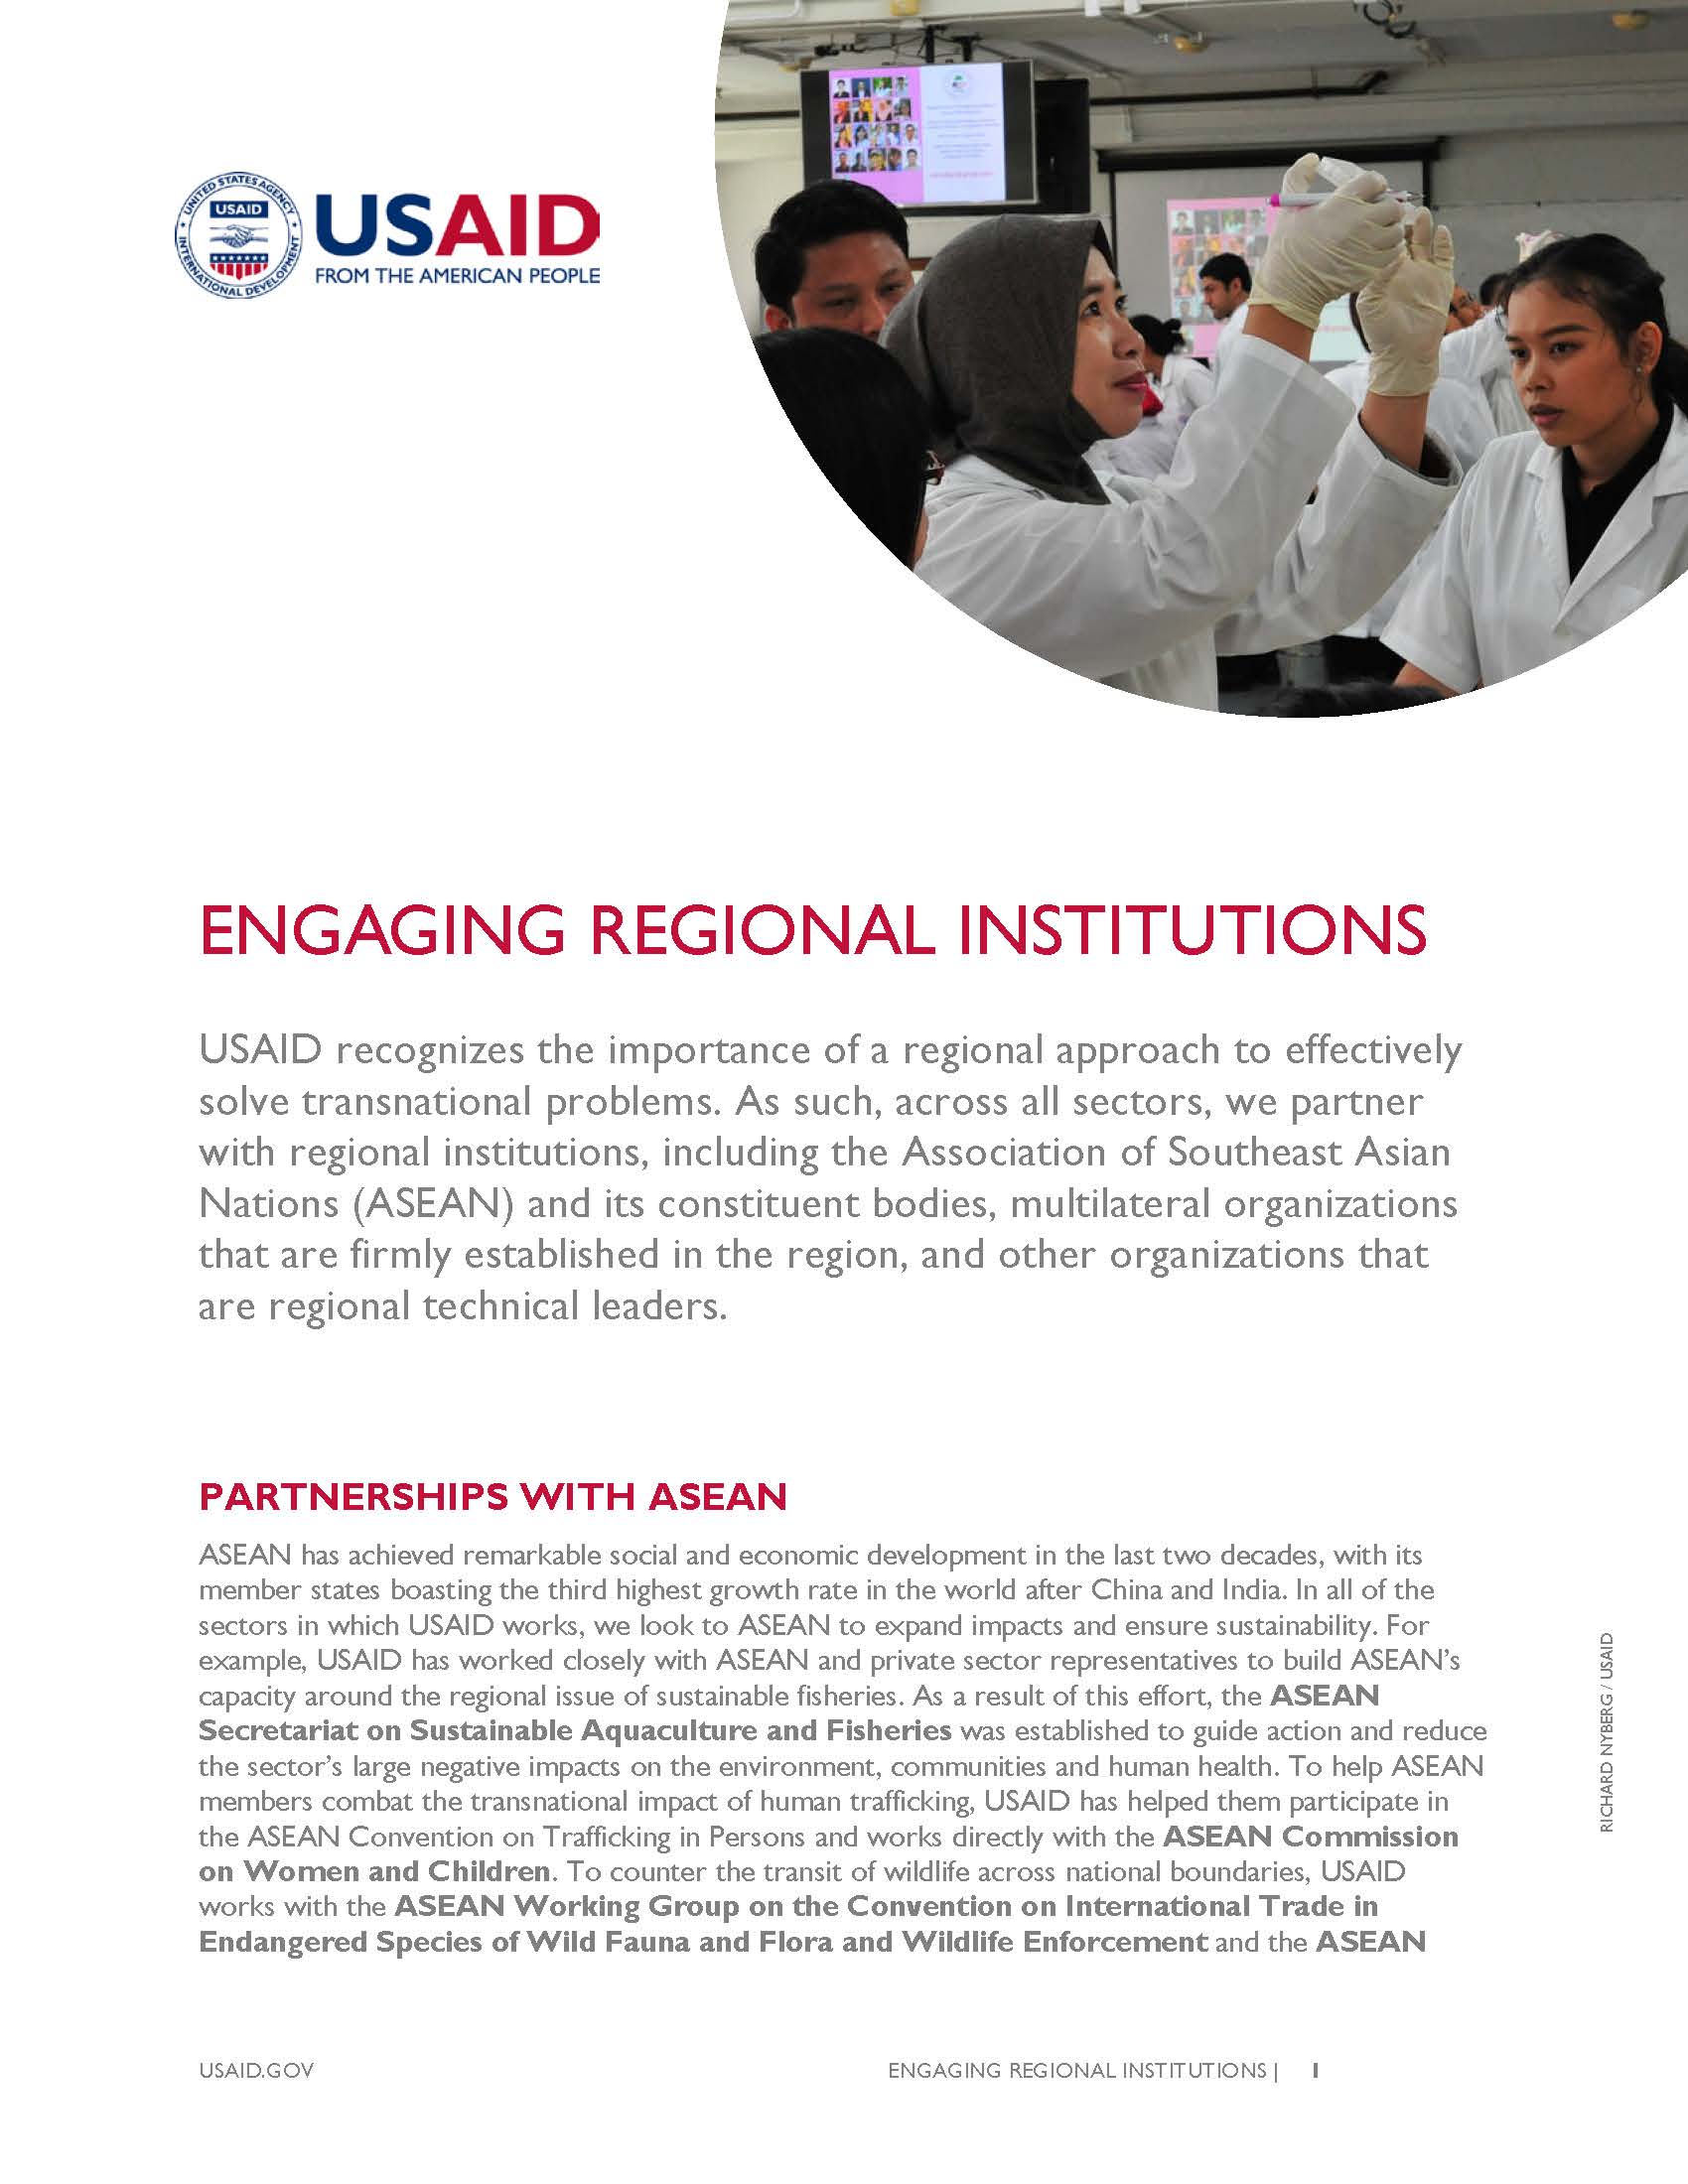 Regional Institutions Fact Sheet